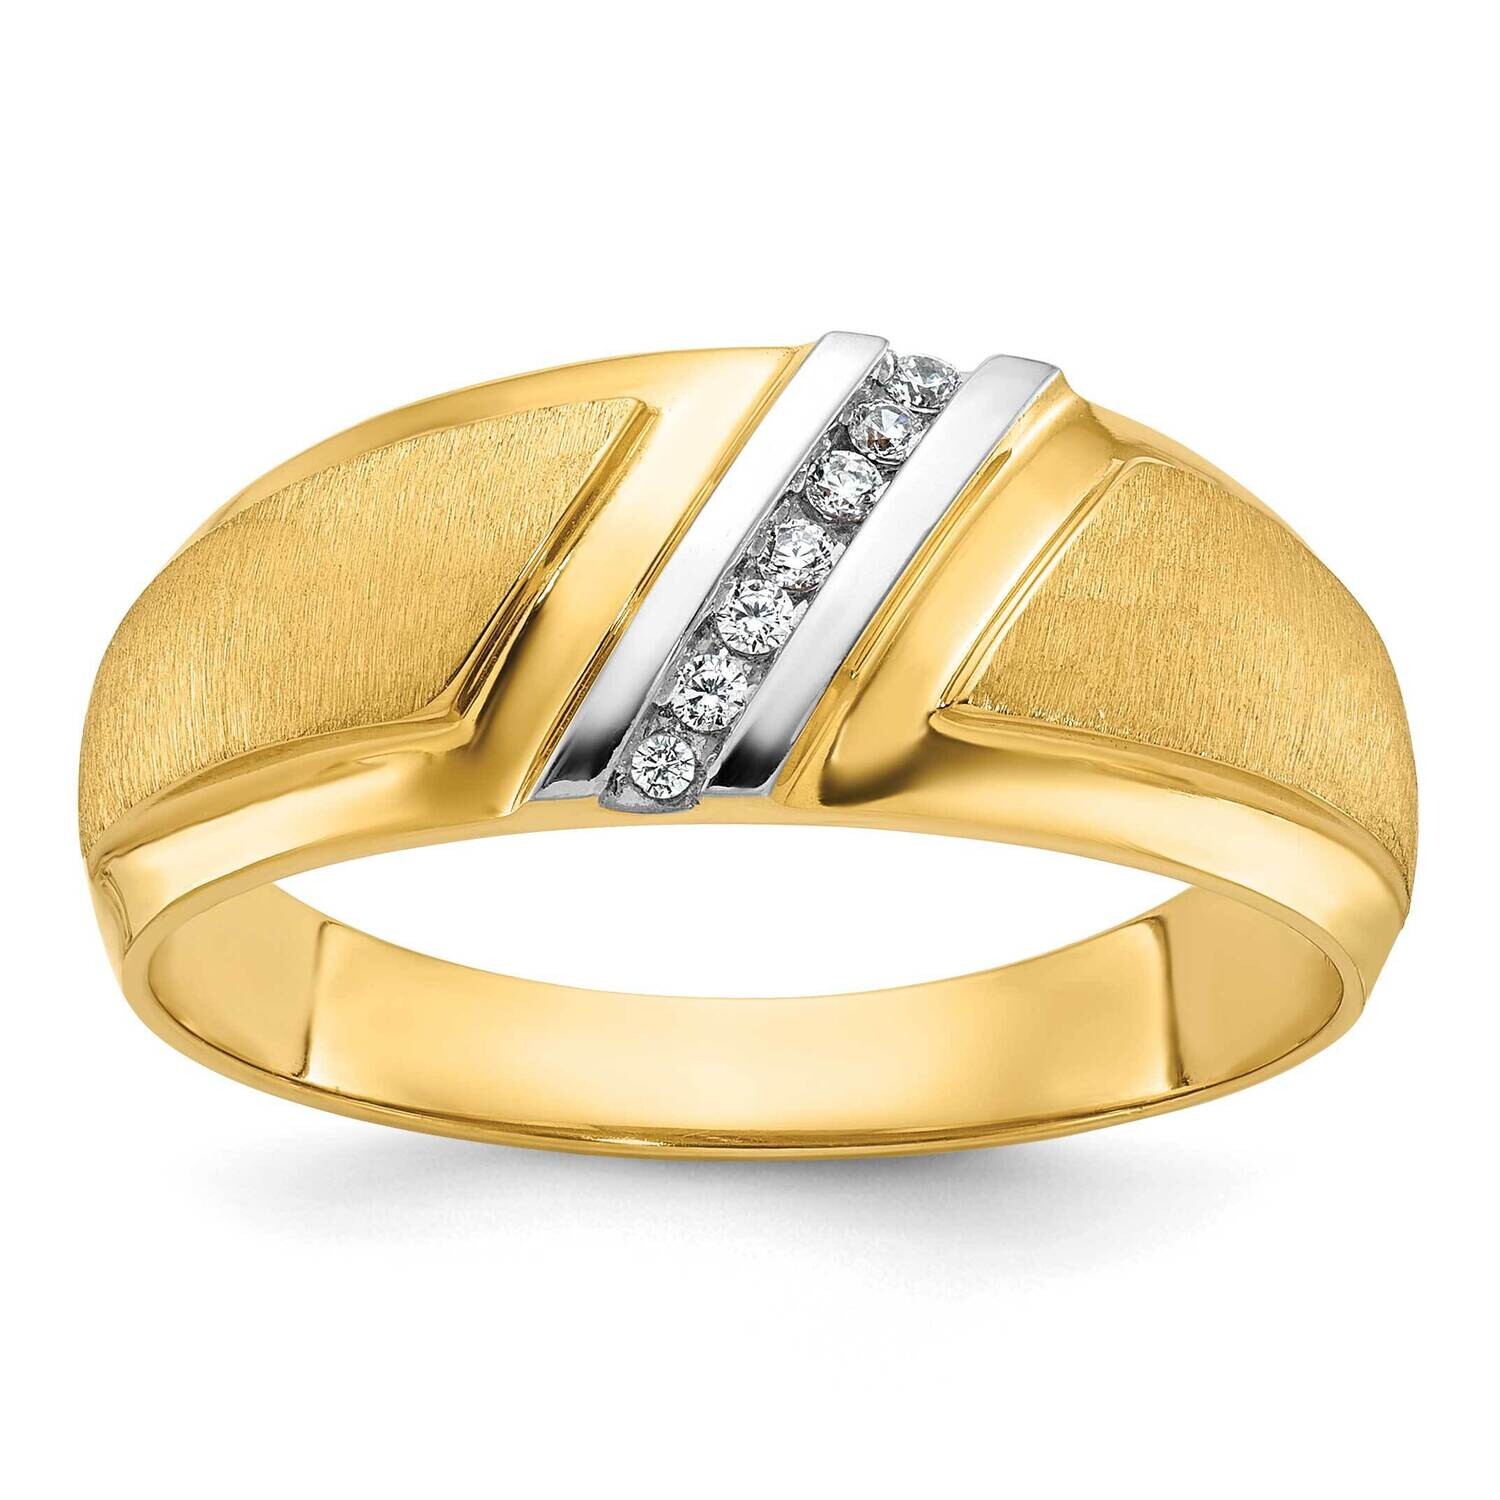 Buy 20 carat gold online | Kalyan Jewellers